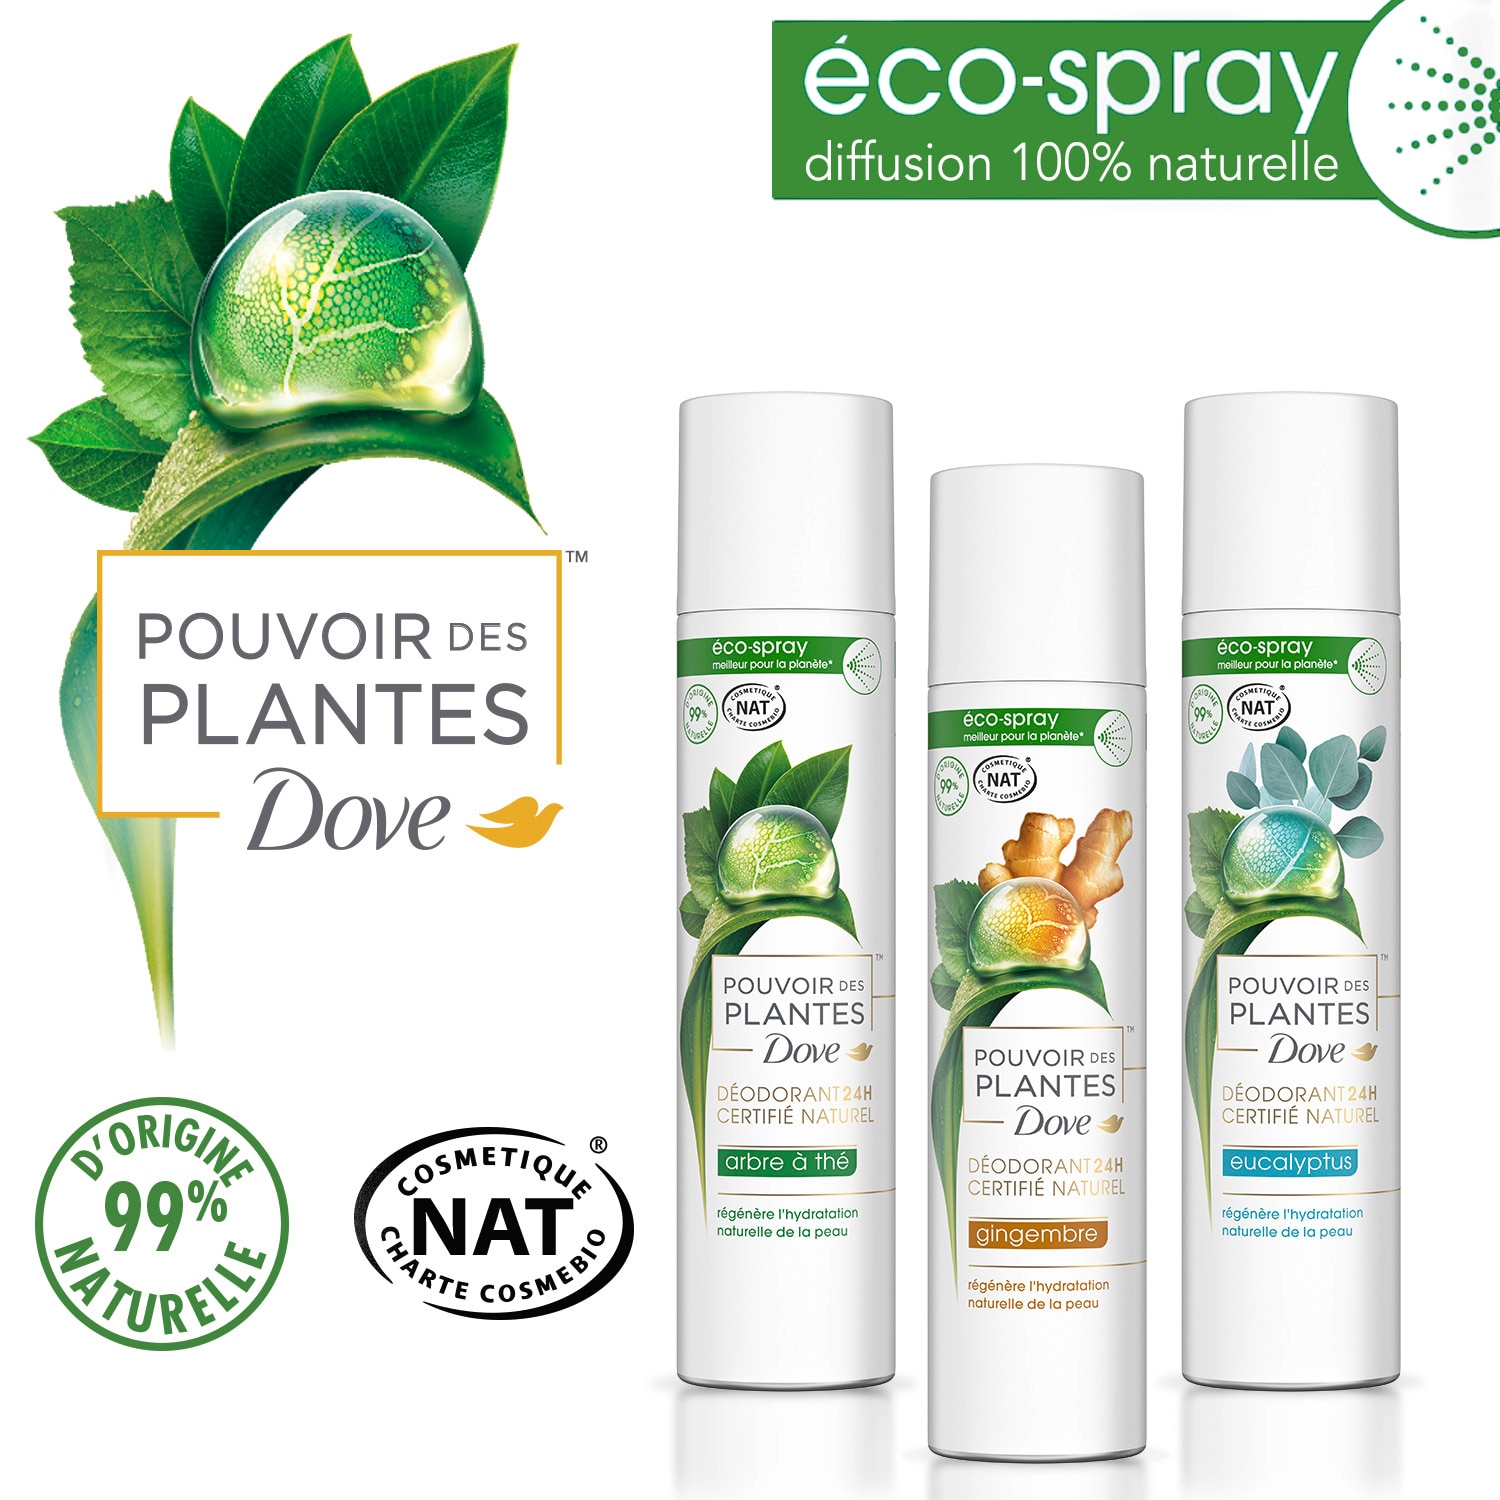 Eco spray - Dove pouvoir des plantes